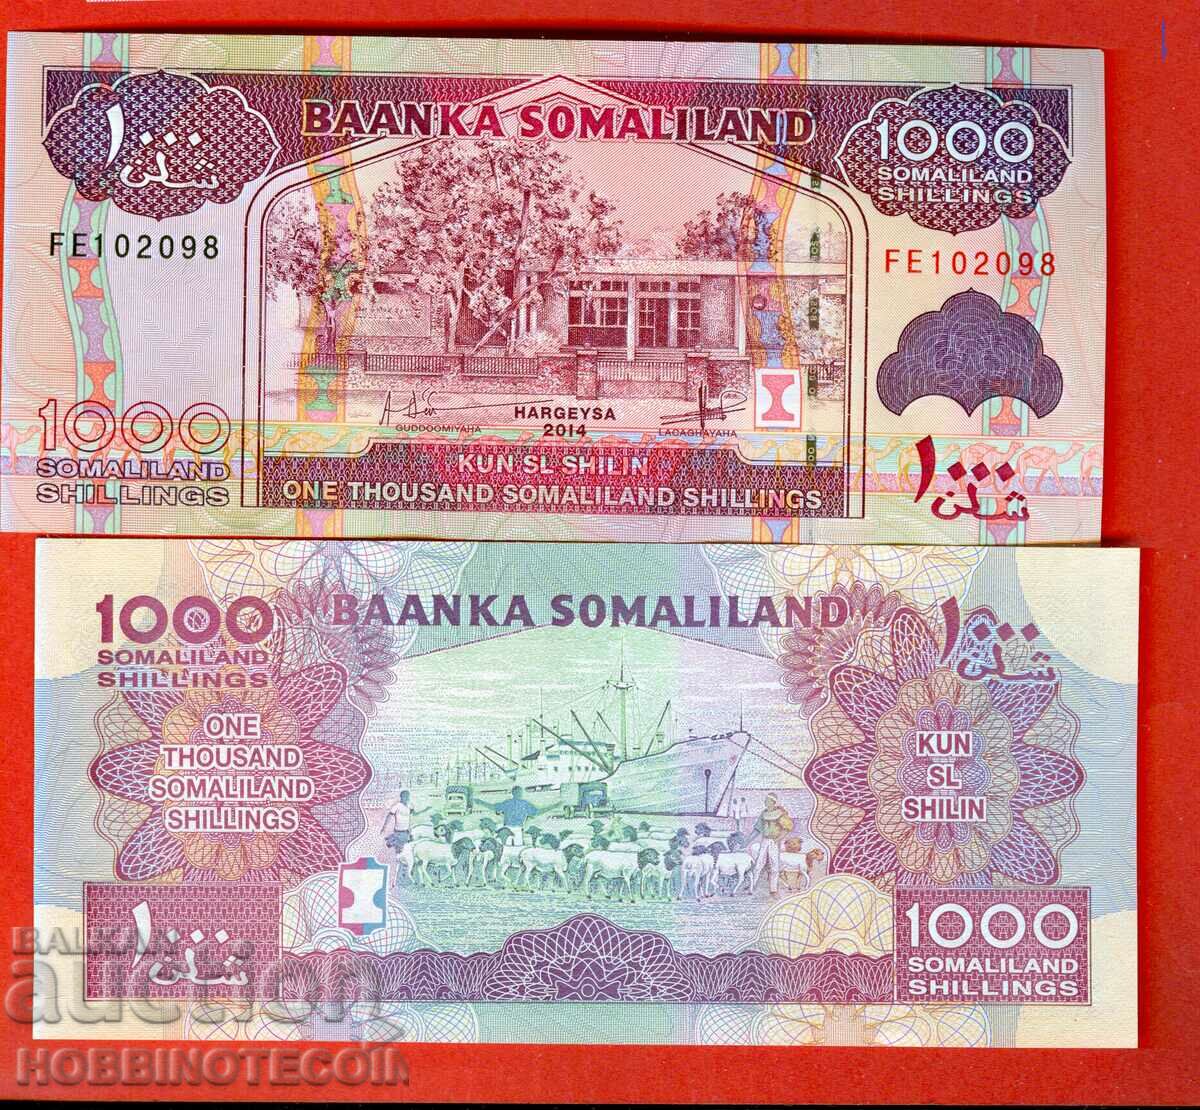 SOMALILAND SOMALILAND 1000 Shilling issue issue 2014 NEW UNC